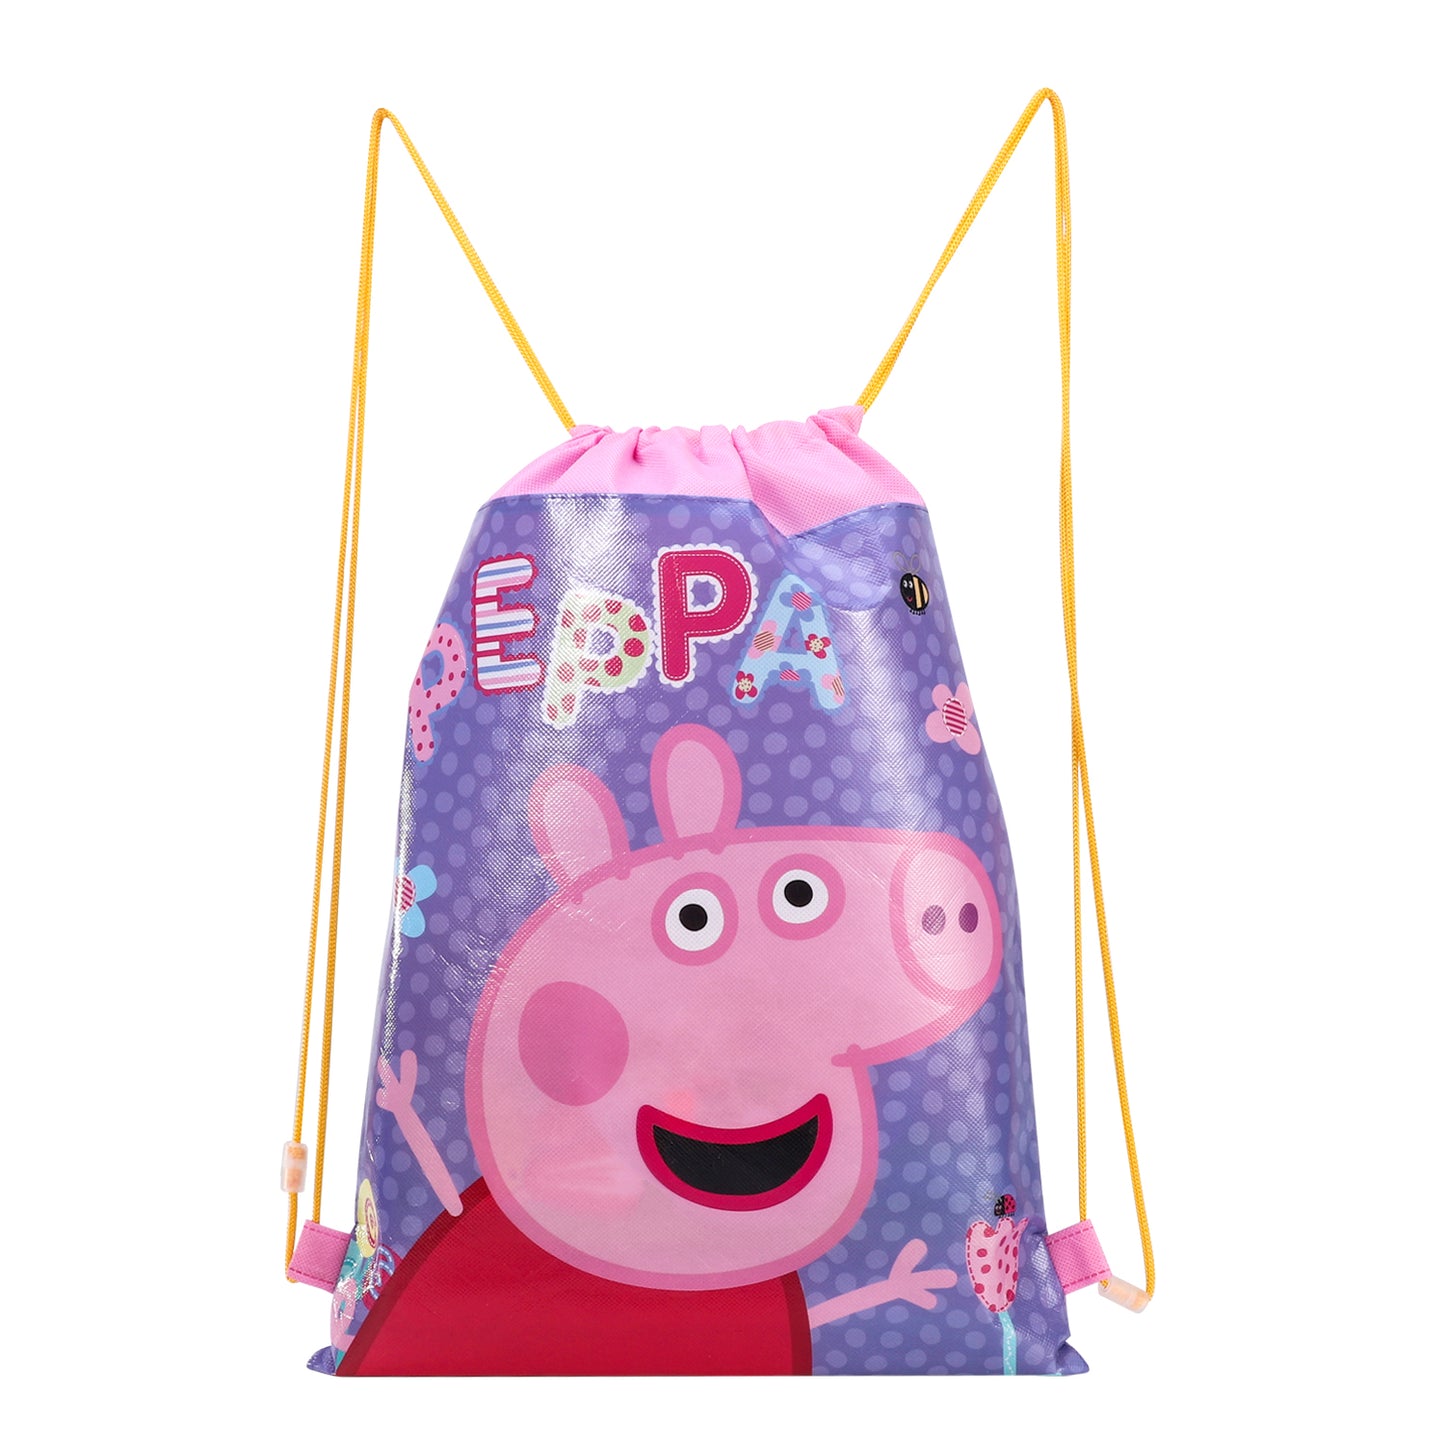 Peppa Drawstring PE Bag Ideal for Swimming, PE, Holidays